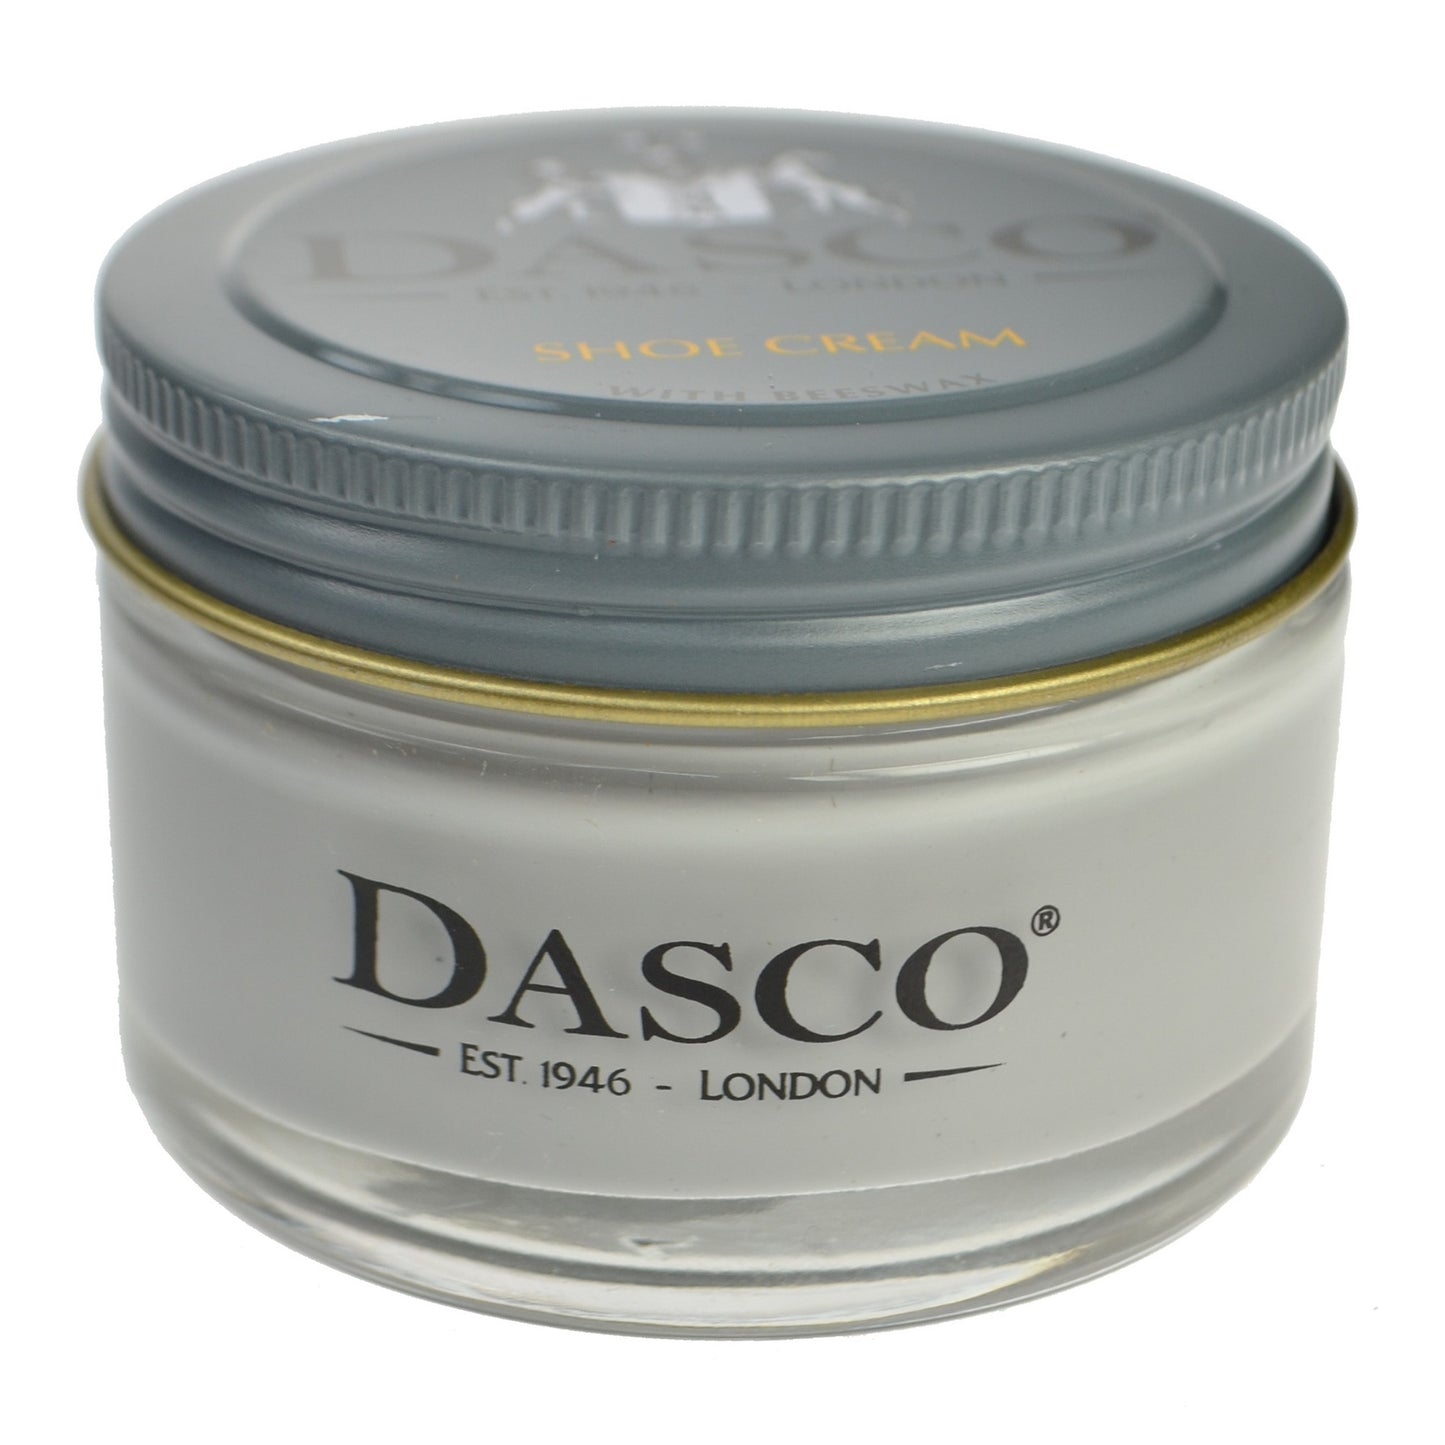 Dasco Shoe Cream Shoe Polish with Beeswax - Light Grey No.182